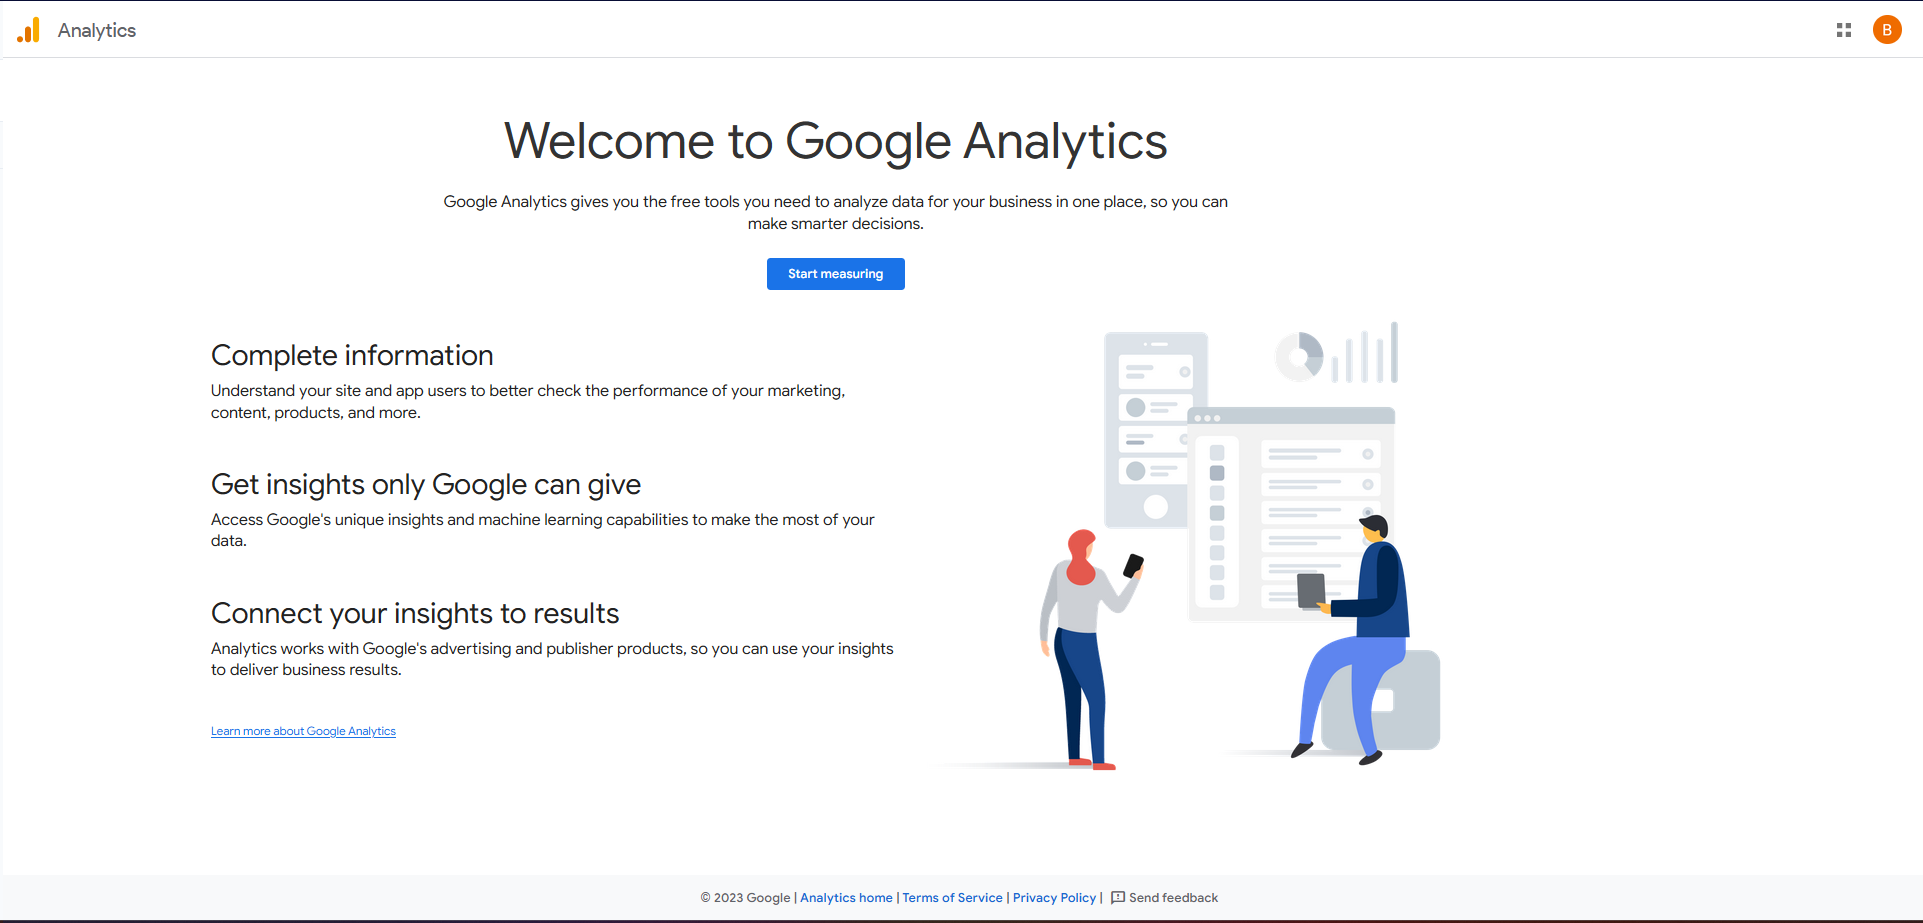 Welcome to Google Analytics screen